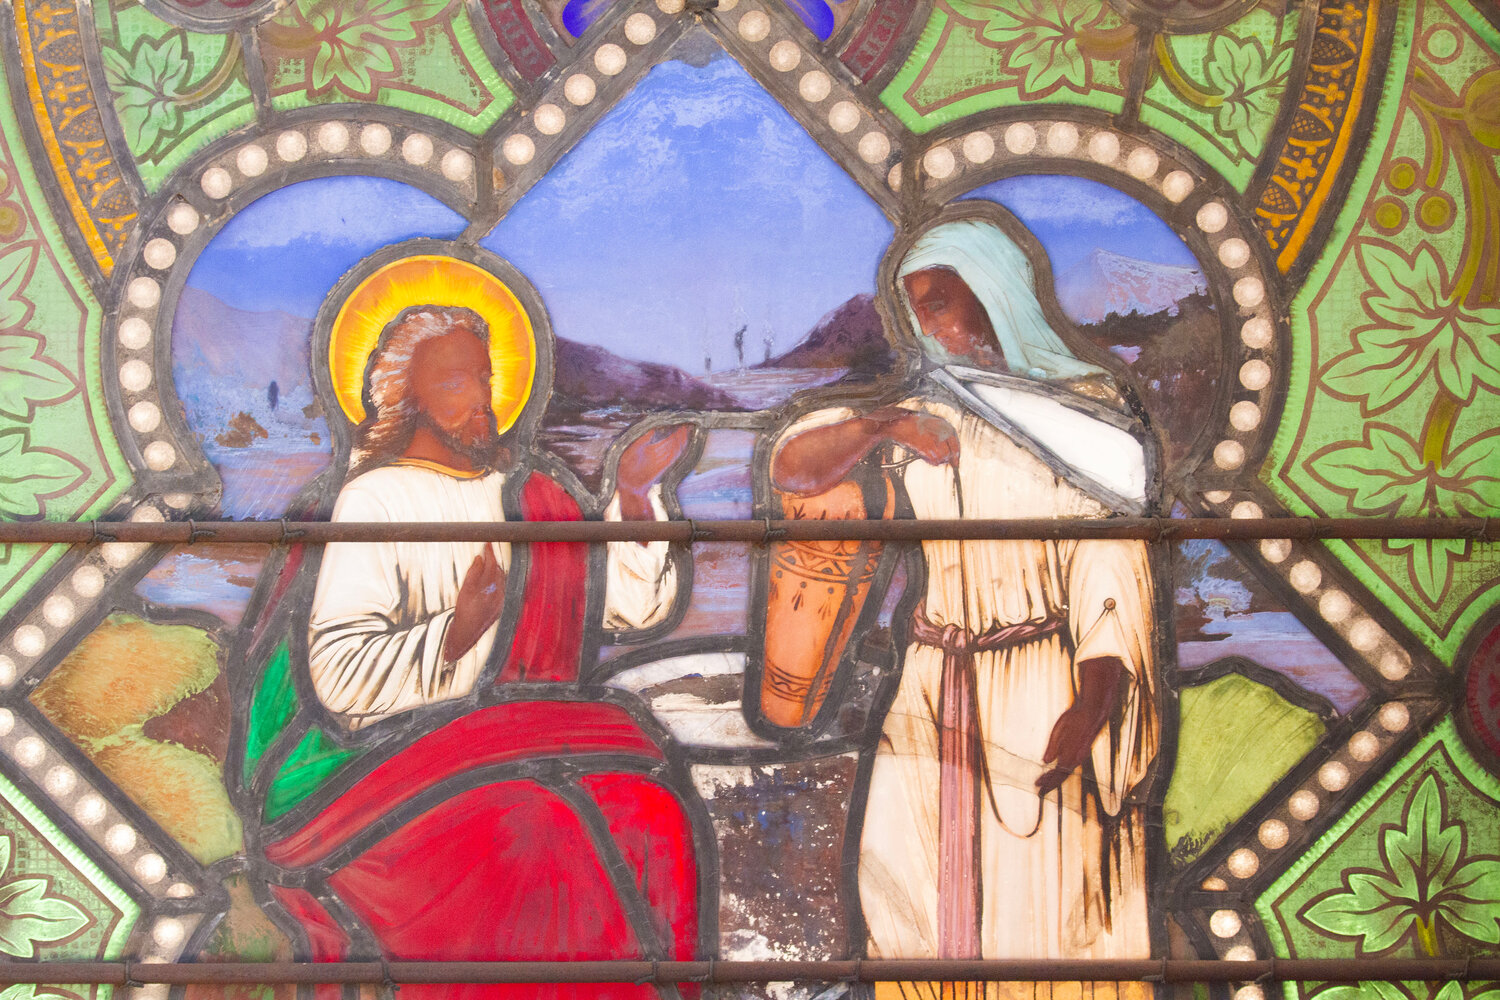 New England stained-glass window shows Jesus Christ with dark skin